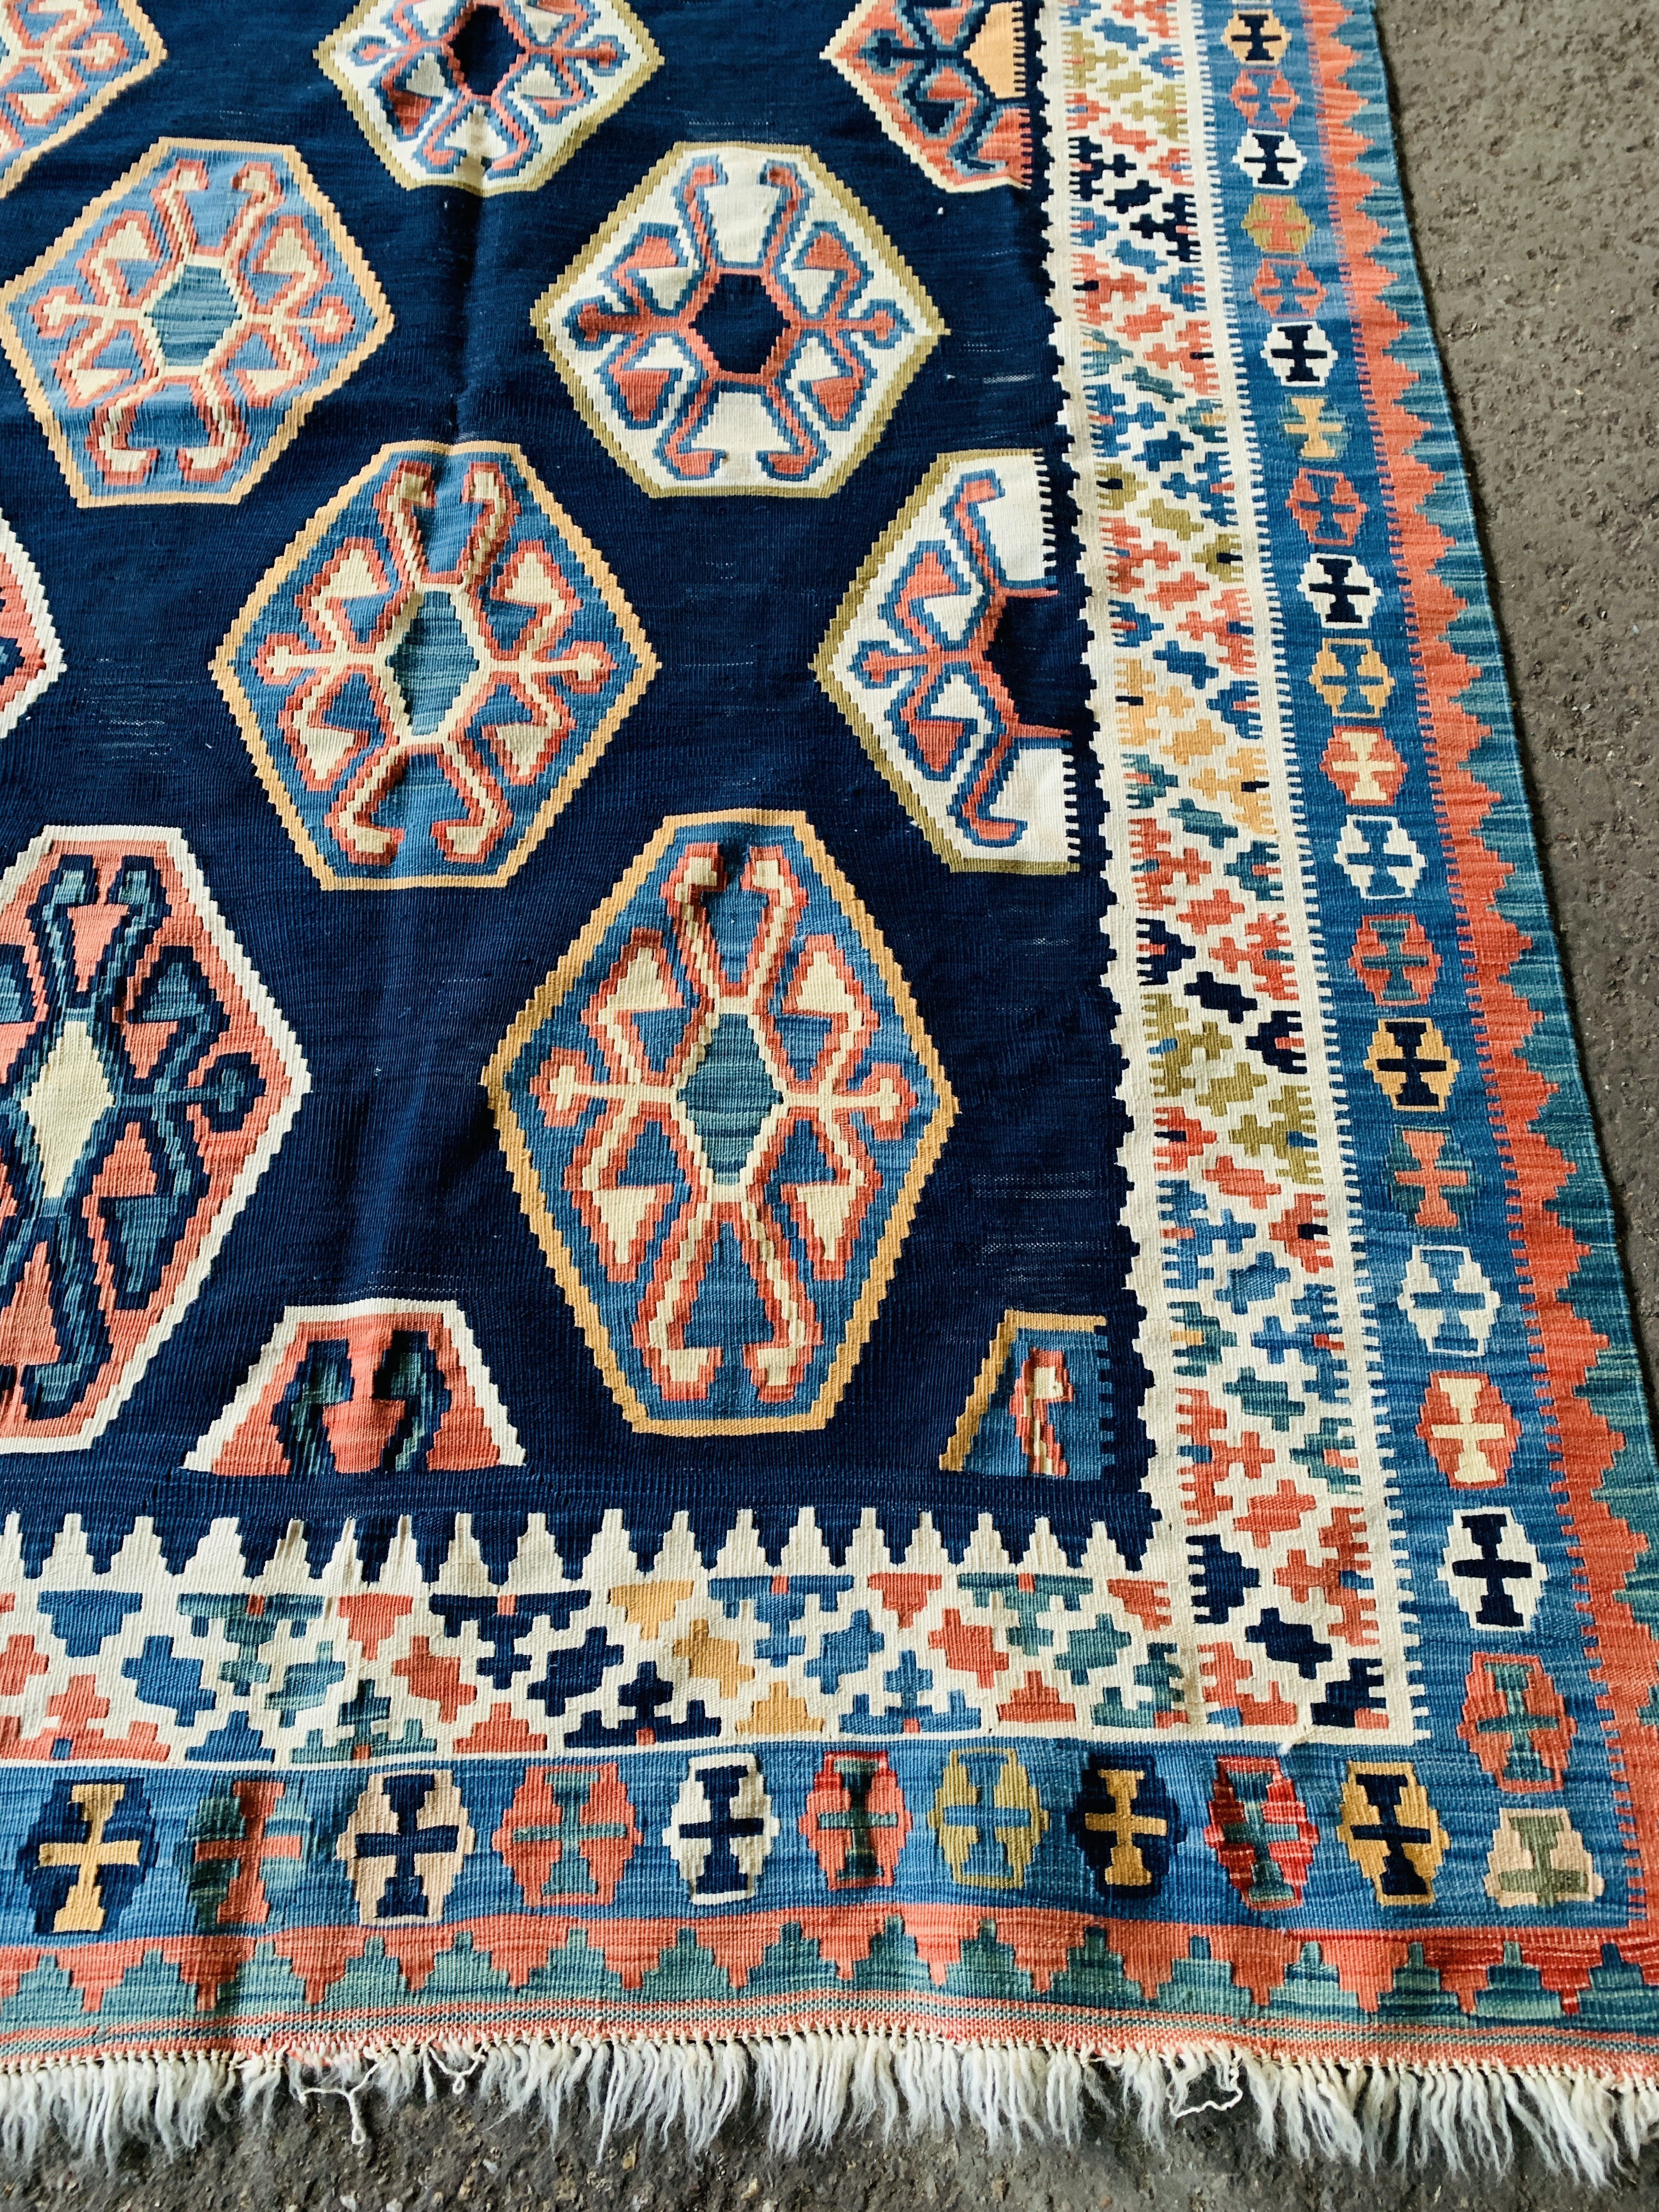 Blue ground geometric pattern rug, - Image 3 of 3